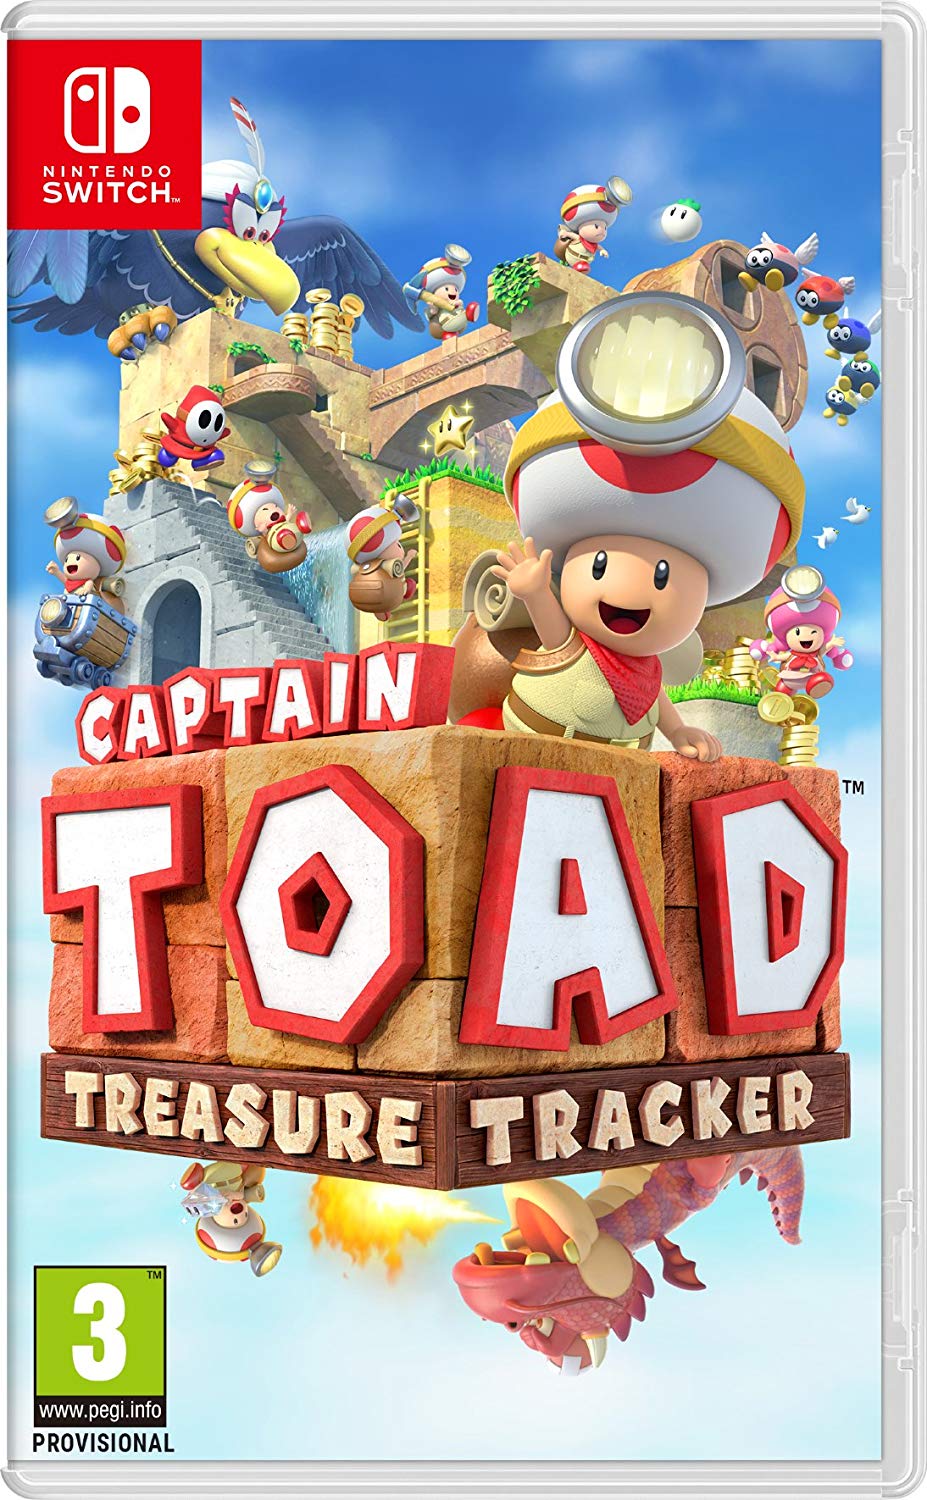 Captain Toad Treasure Tracker